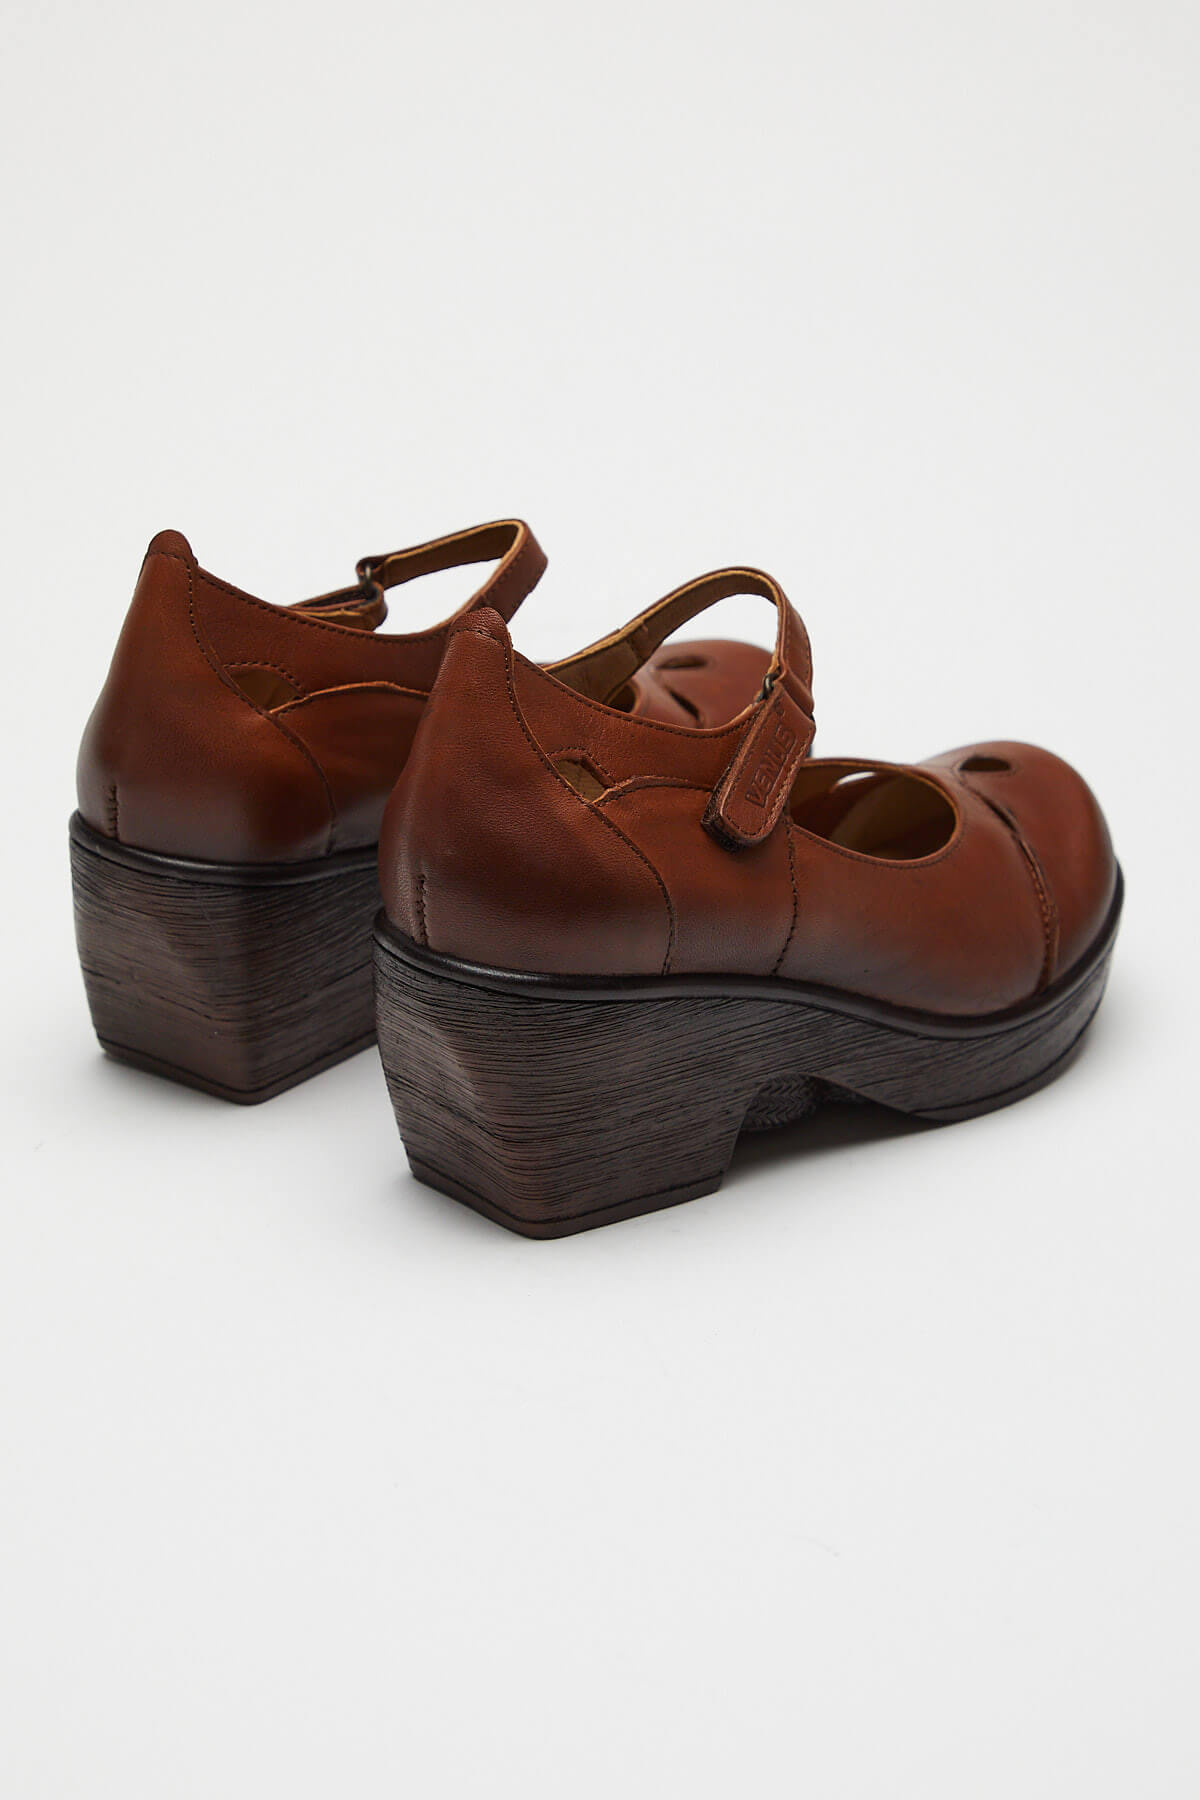 Kadın Apartman Topuk Deri Ayakkabı Kahve 1912501 - Thumbnail